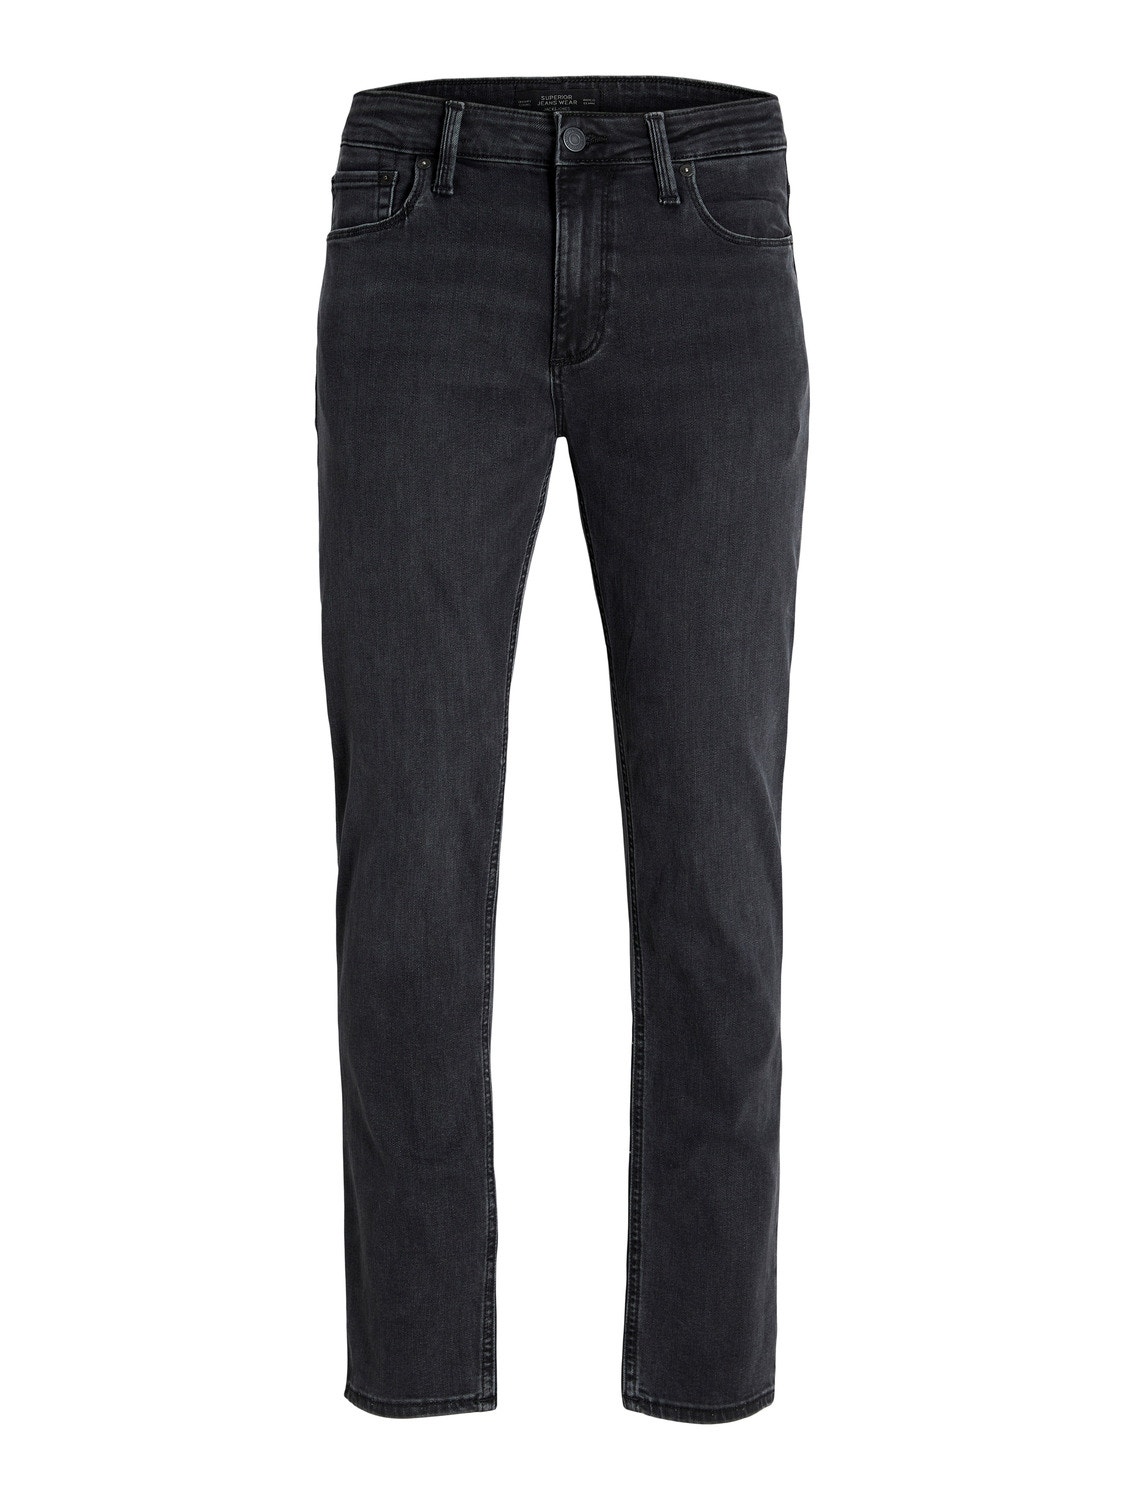 JJIMIKE JJEVAN AM 777 LID Tapered fit jeans with 50% discount! | Jack ...